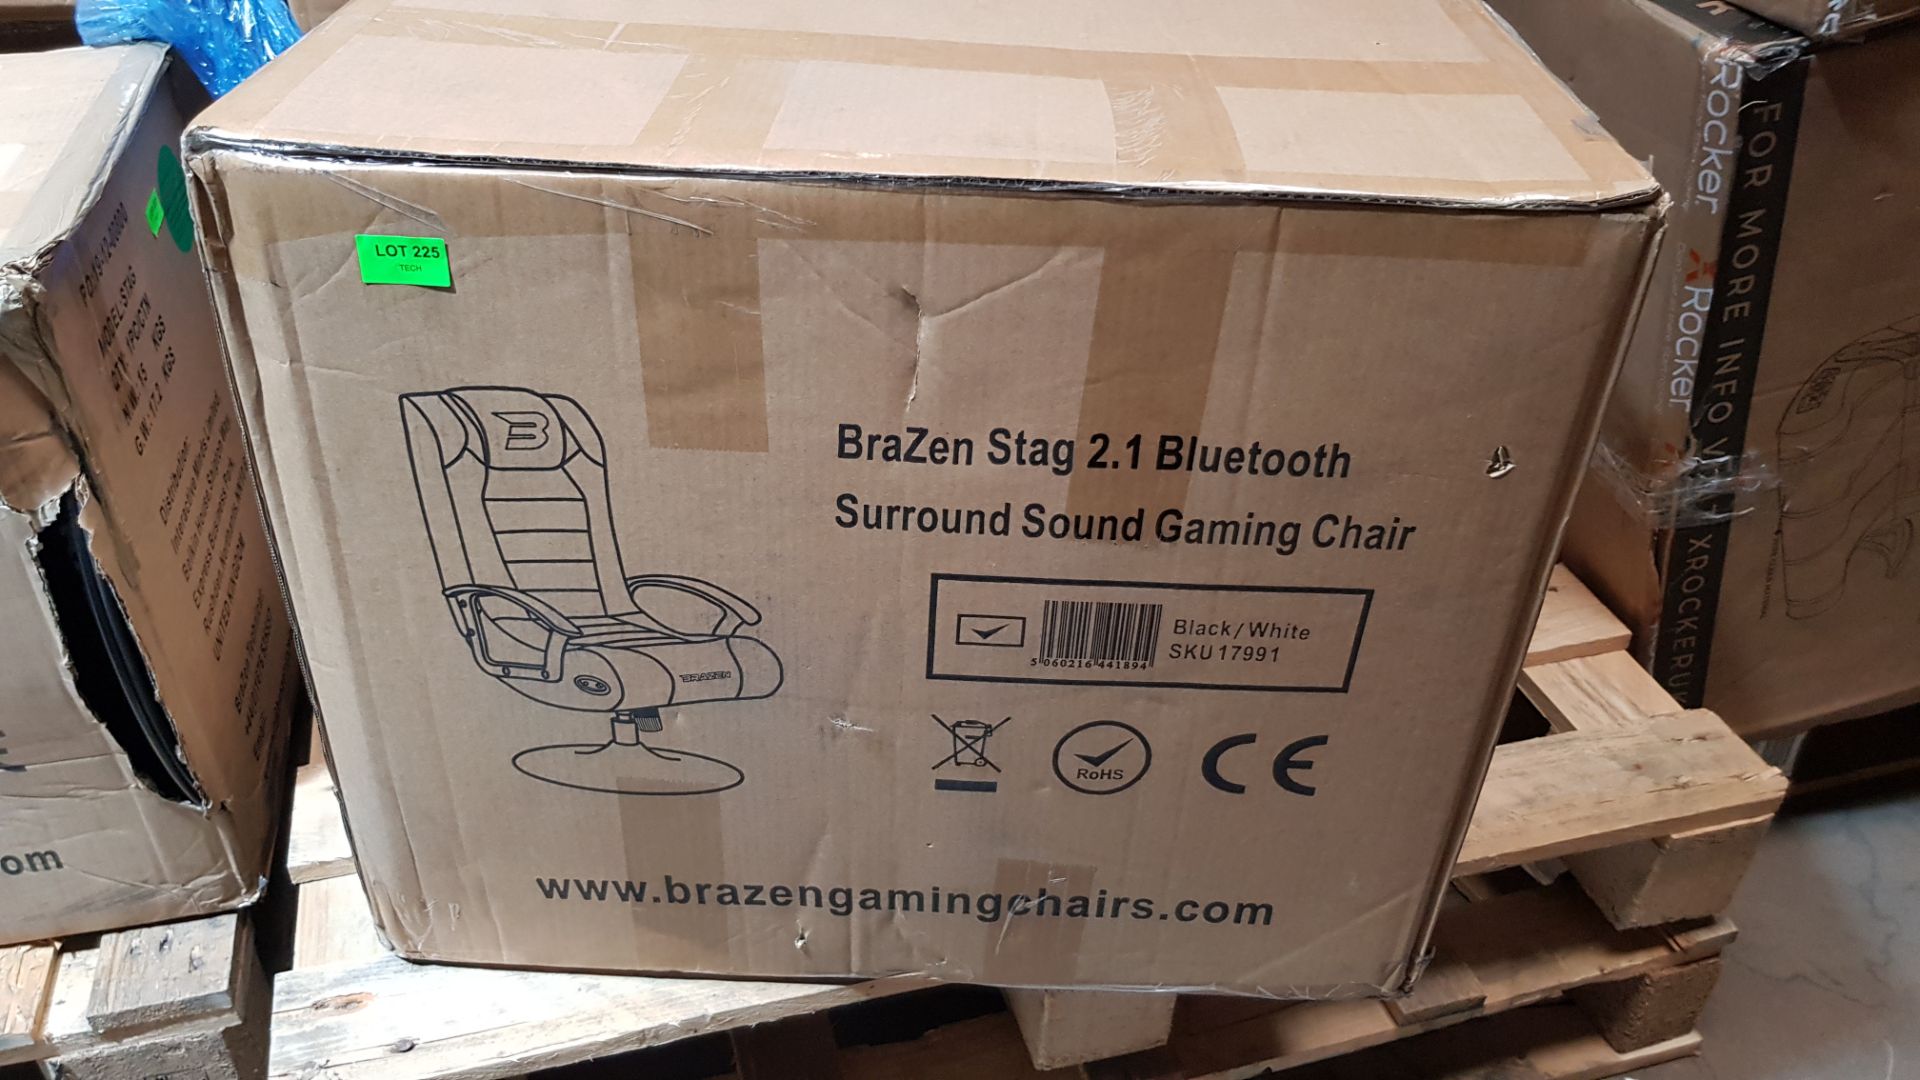 RRP £149. Brazen Stag 2.1 Bluetooth Surround Sound Gaming Chair (Black / White). BraZen Stag 2.1 B - Image 2 of 3